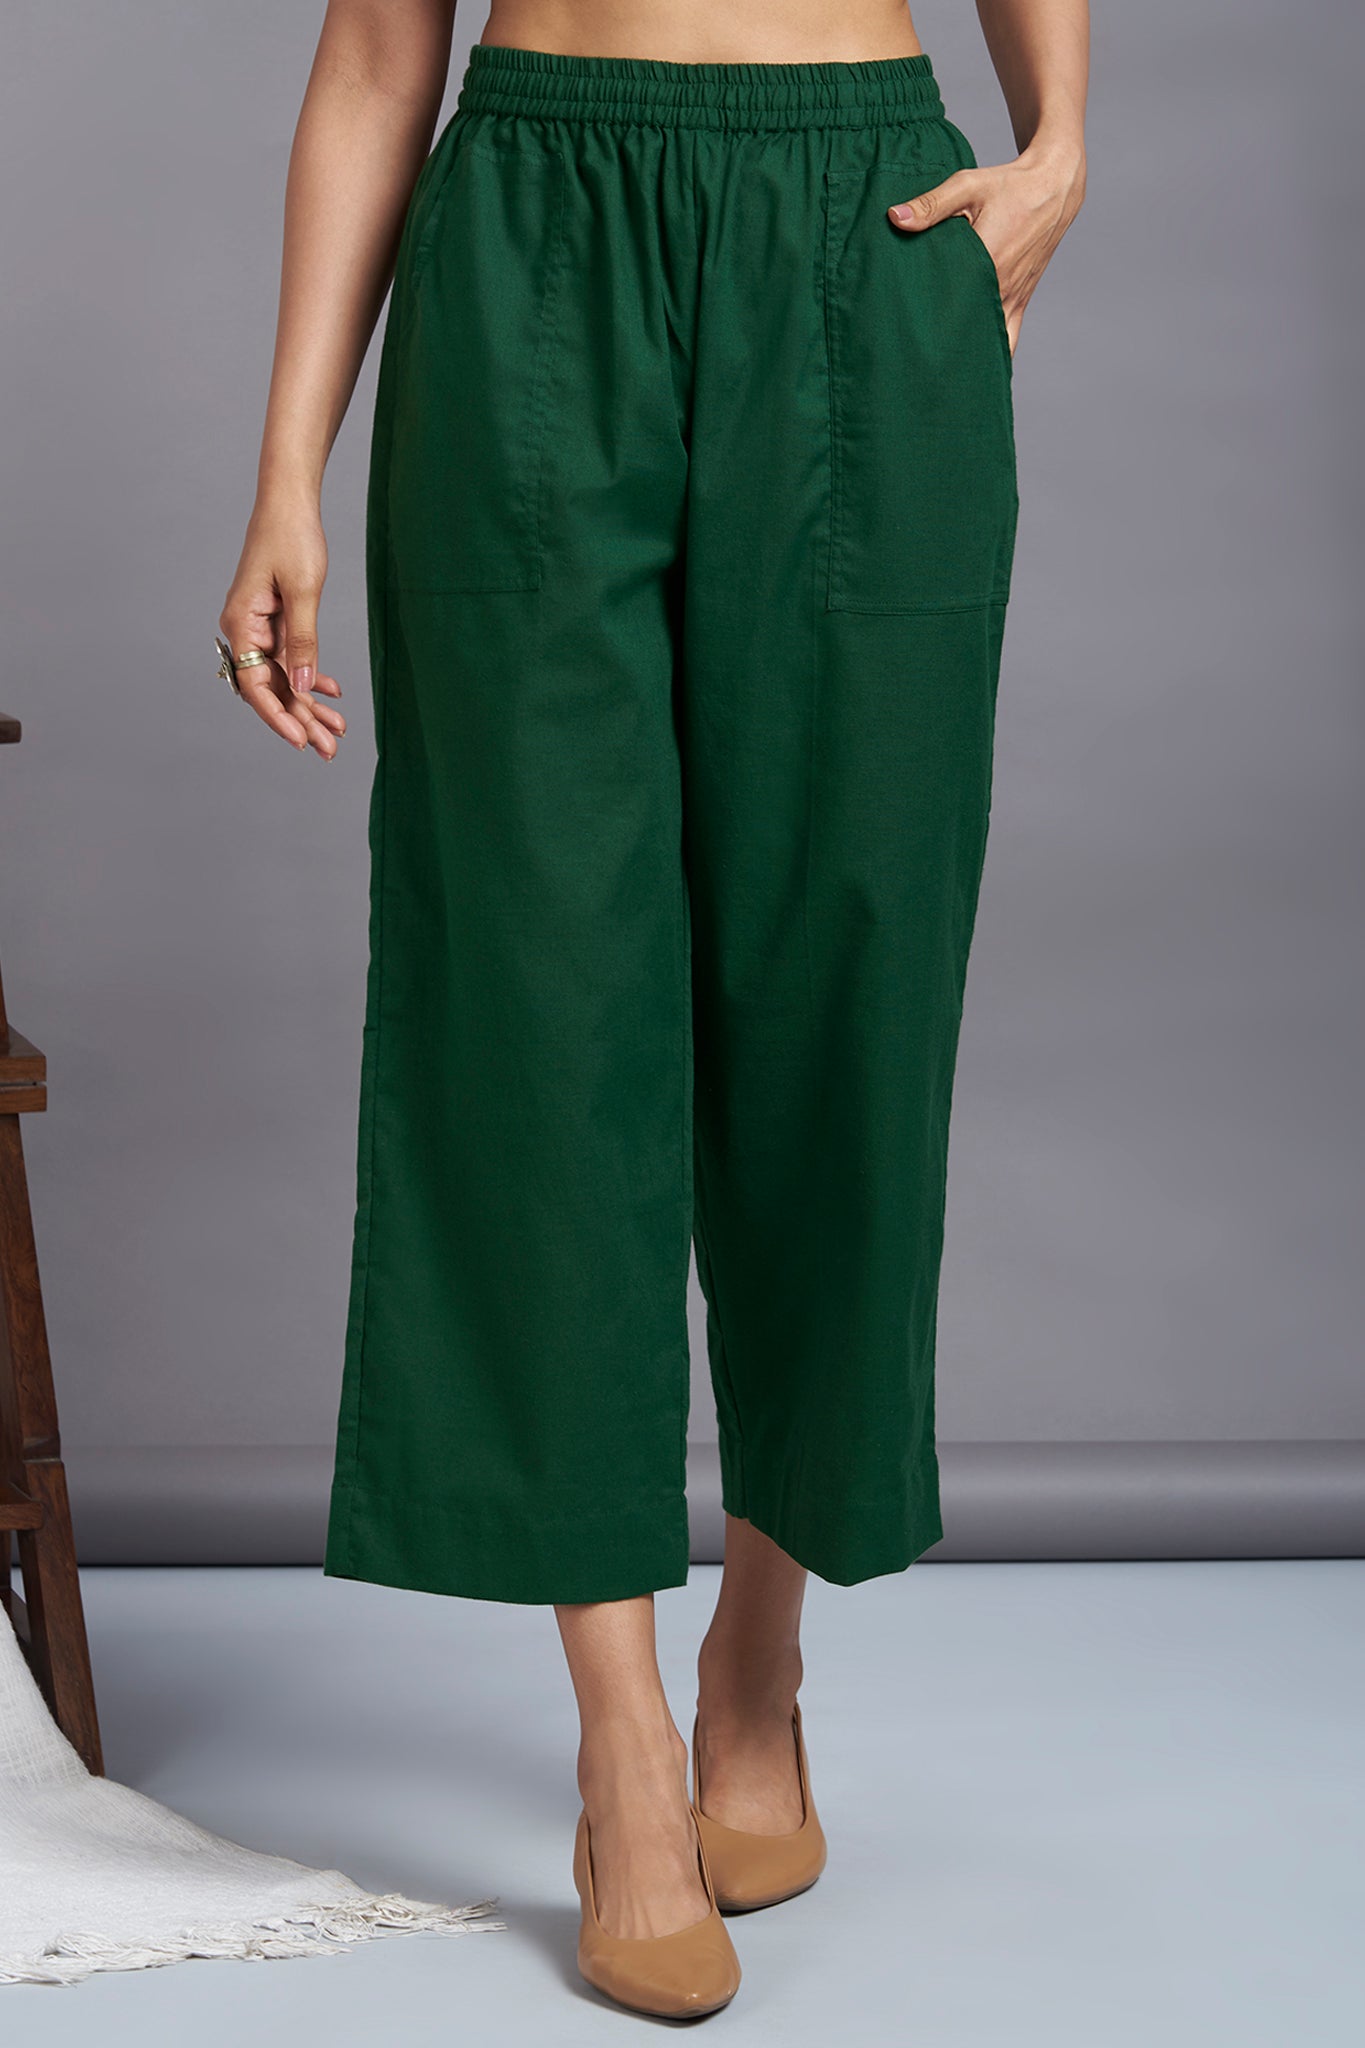 Blue Print Modal Women Comfort Fit Pants - Selling Fast at Pantaloons.com